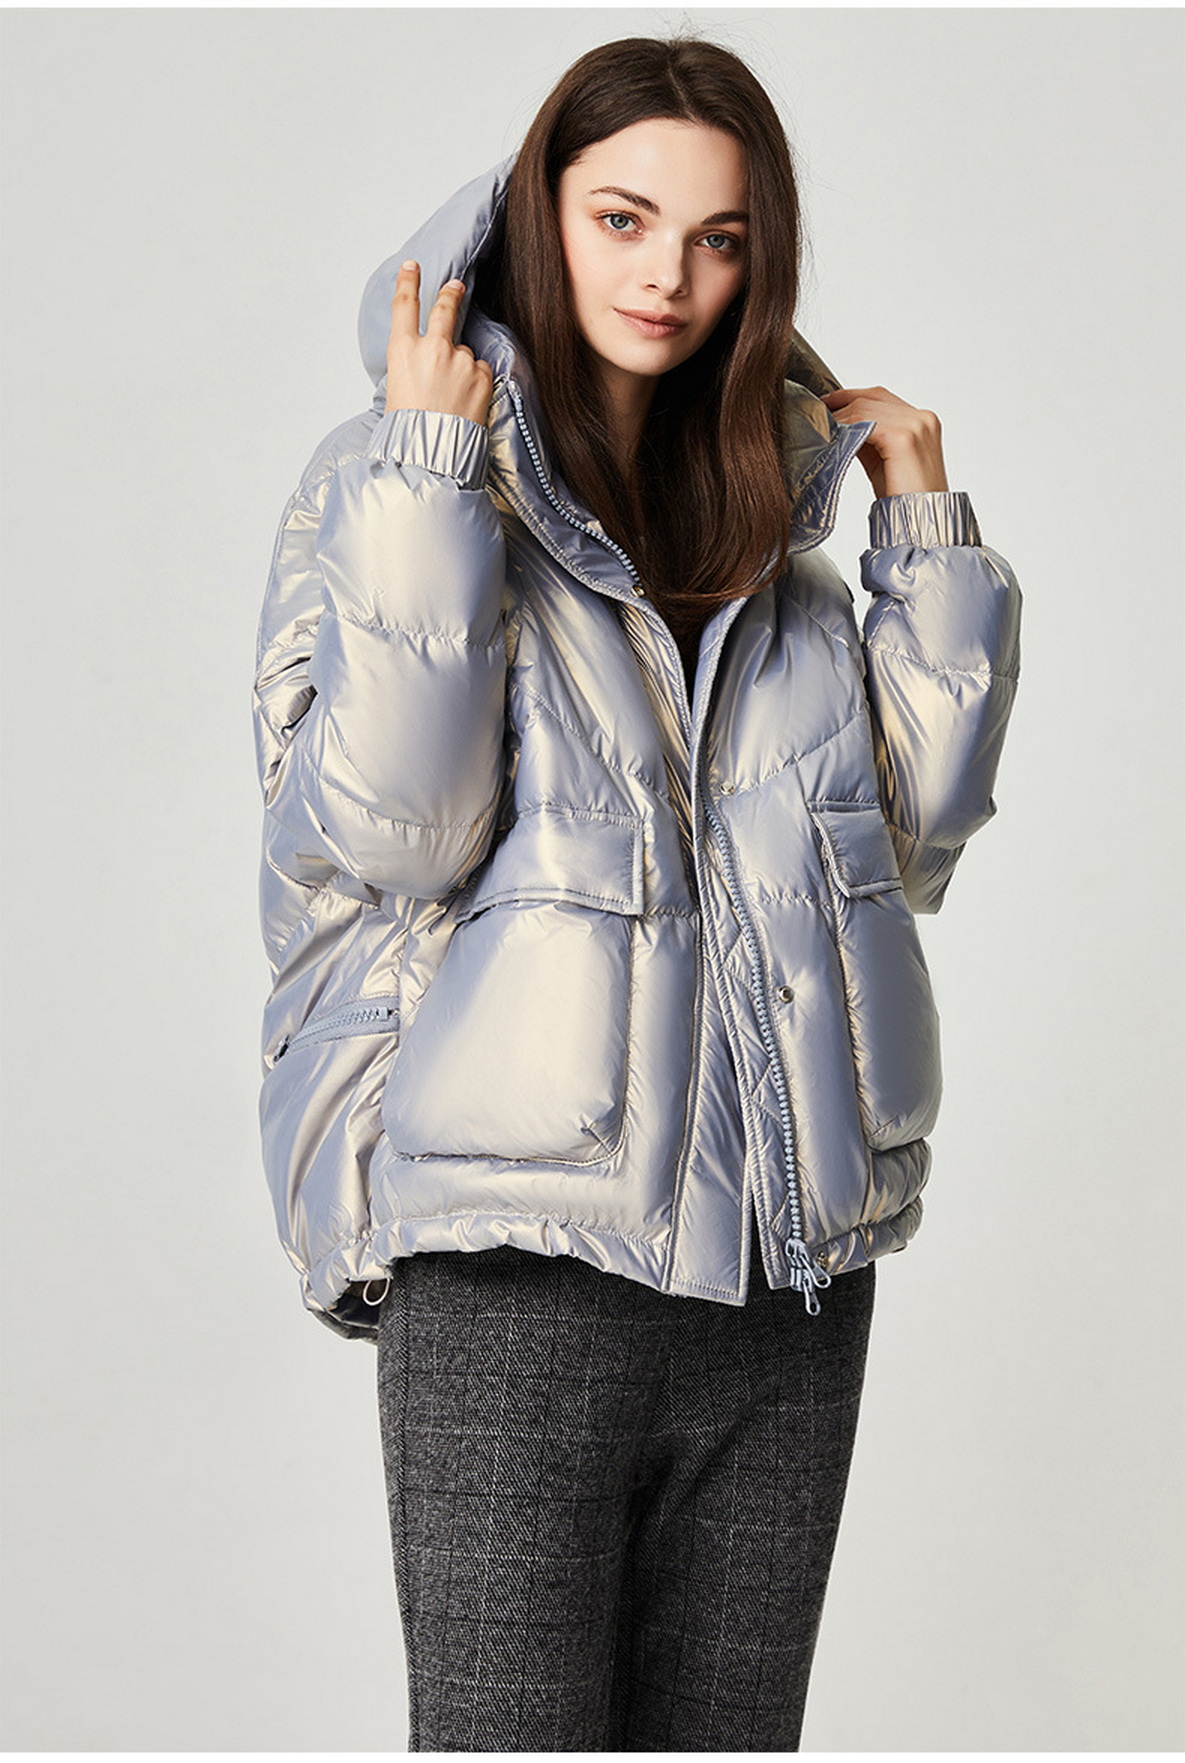 Women's New High-neck Hooded Fashionable Temperament Warm Jacket